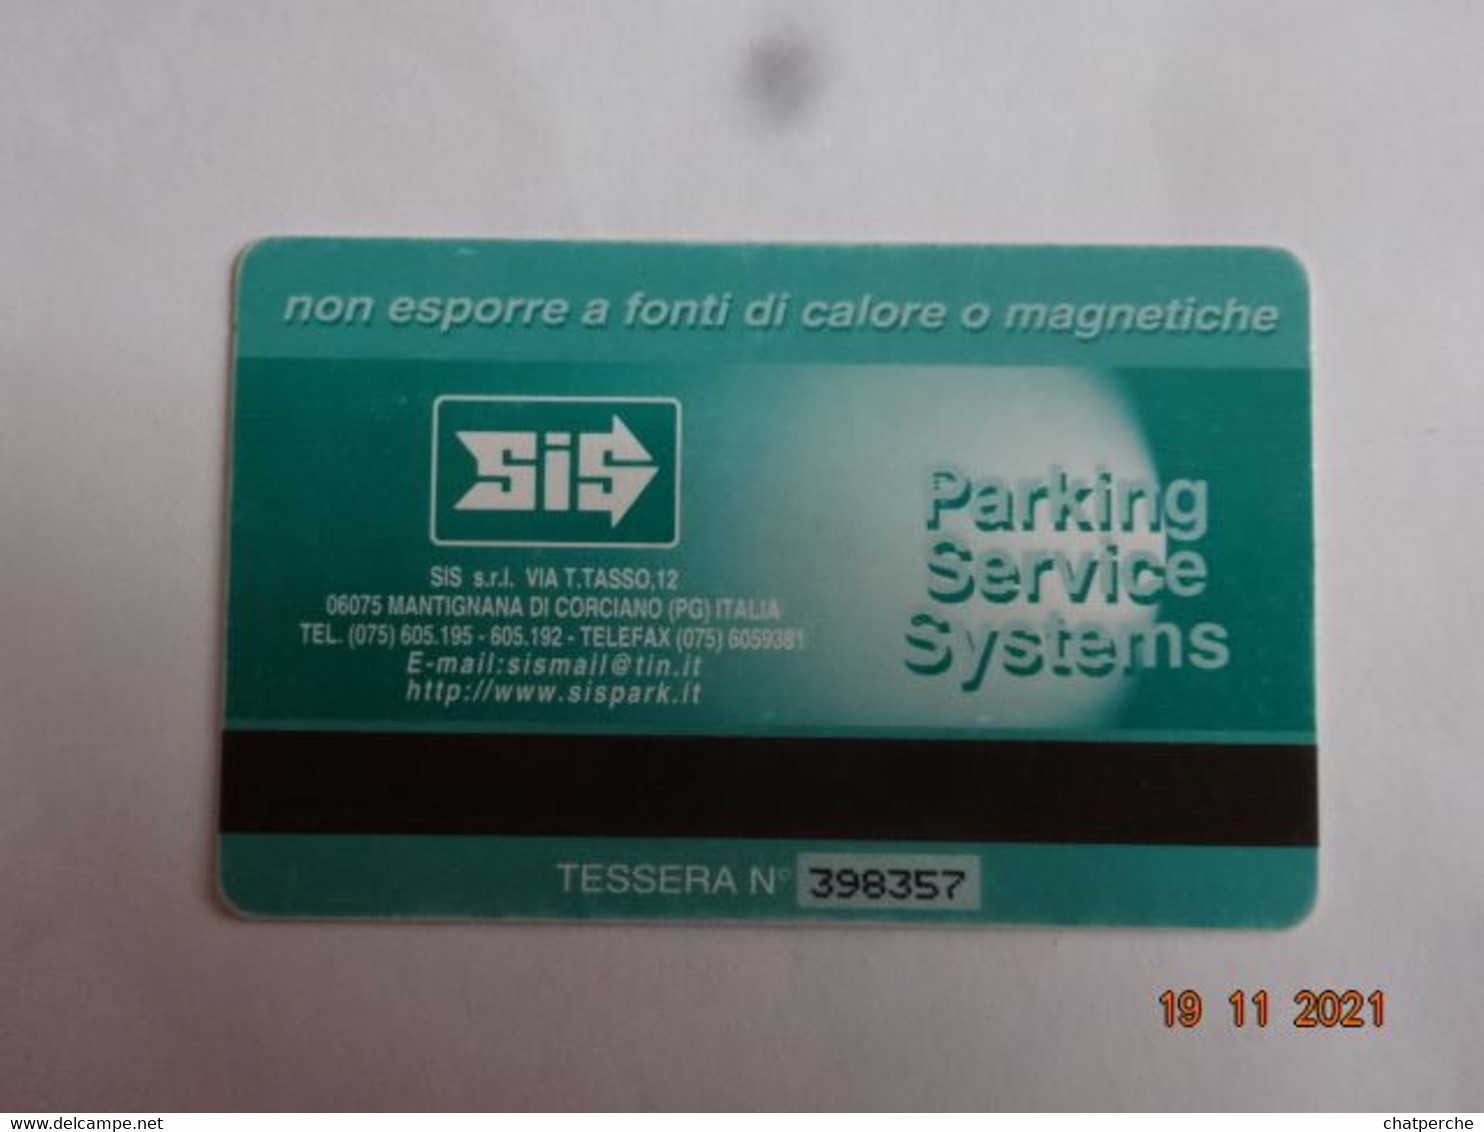 ITALIE ITALIA CARTE STATIONNEMENT BANDE MAGNÉTIQUE PARKIBG CARD 5.000 - [4] Sammlungen